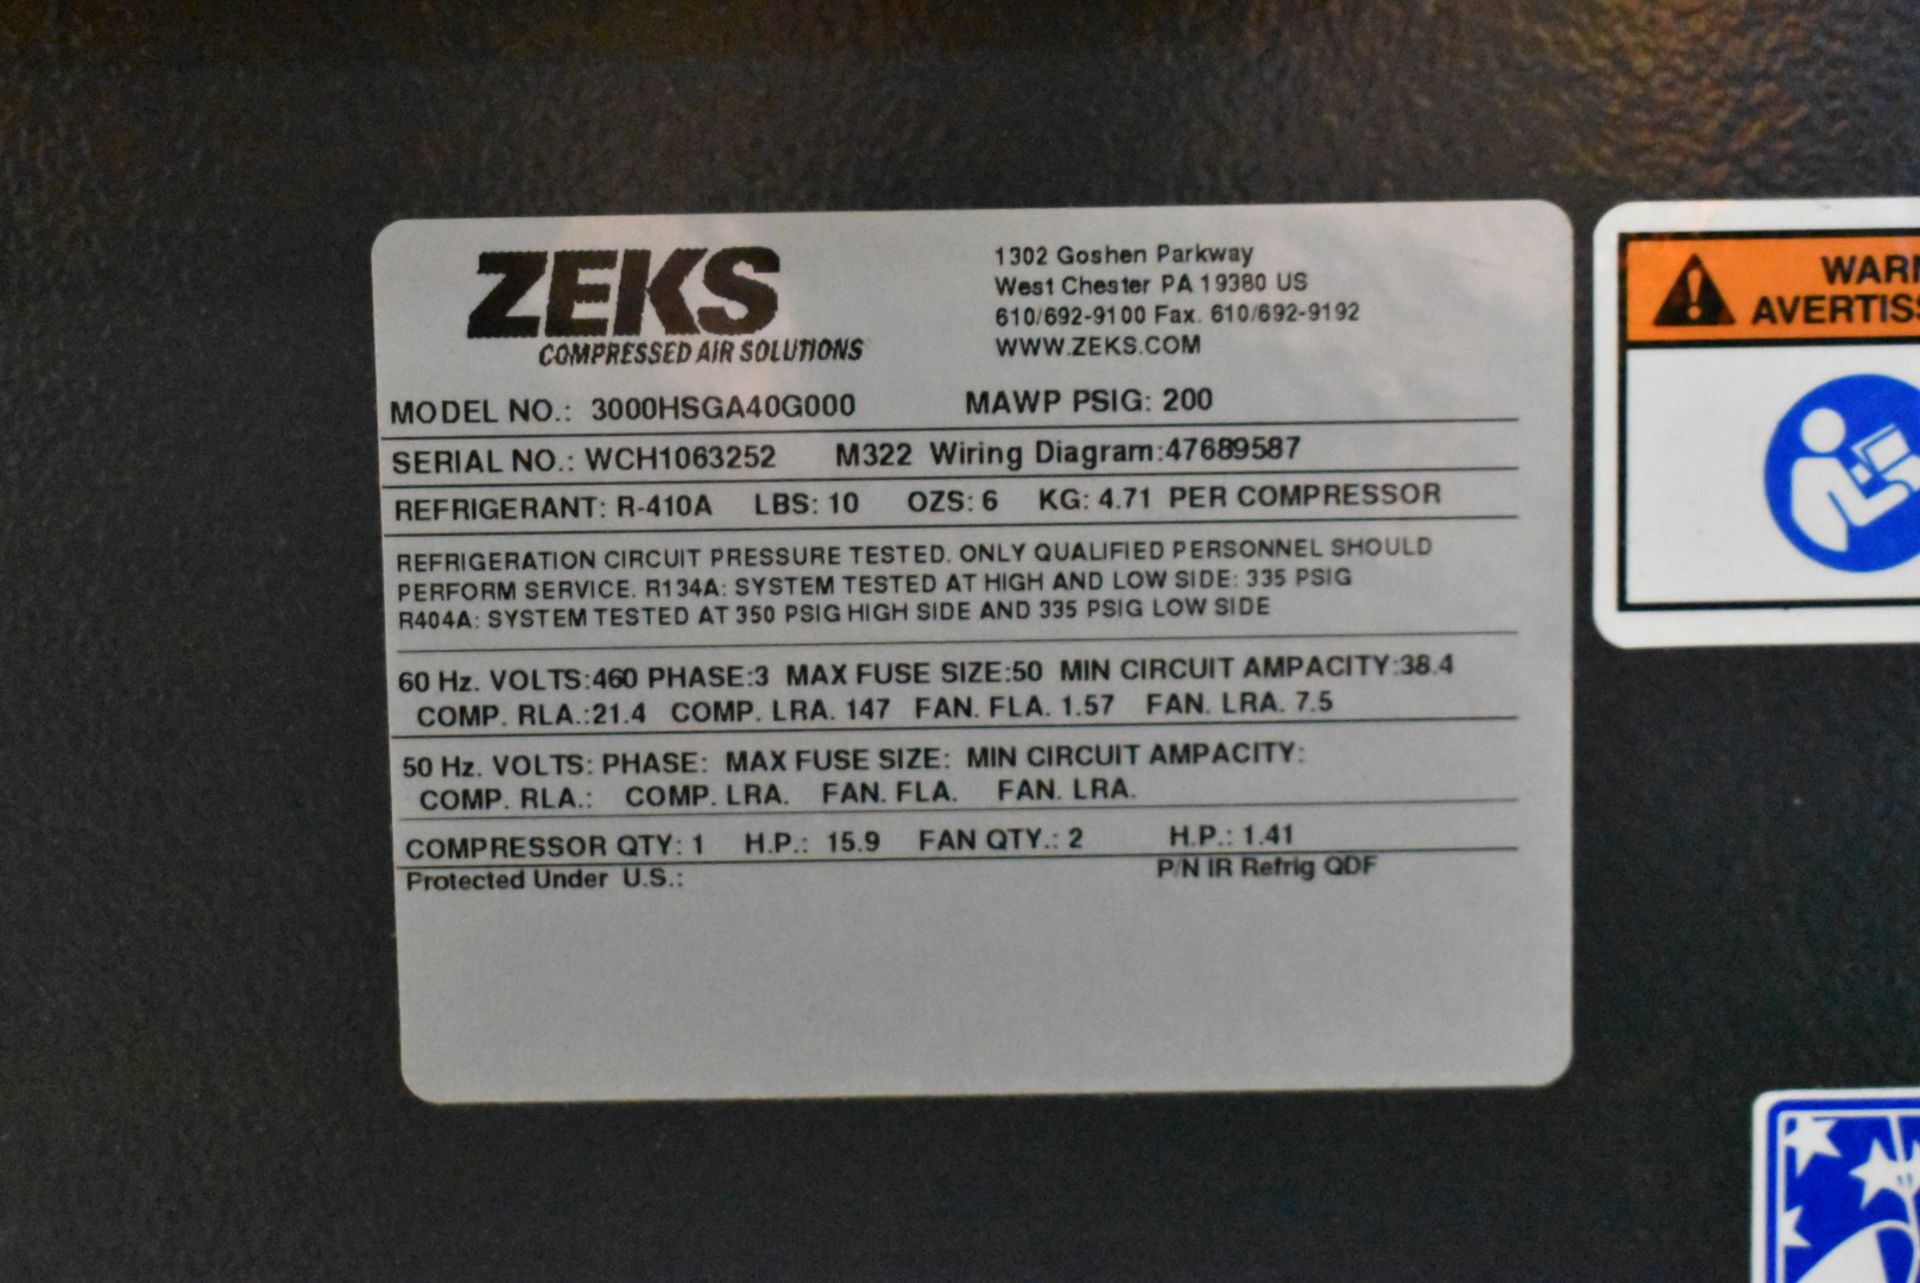 ZEKS (2021) 3000HSGA40G000 REFRIGERATED AIR DRYER WITH 3000 SCFM @ 100 PSIG CAPACITY, S/N WCH1063252 - Image 6 of 6